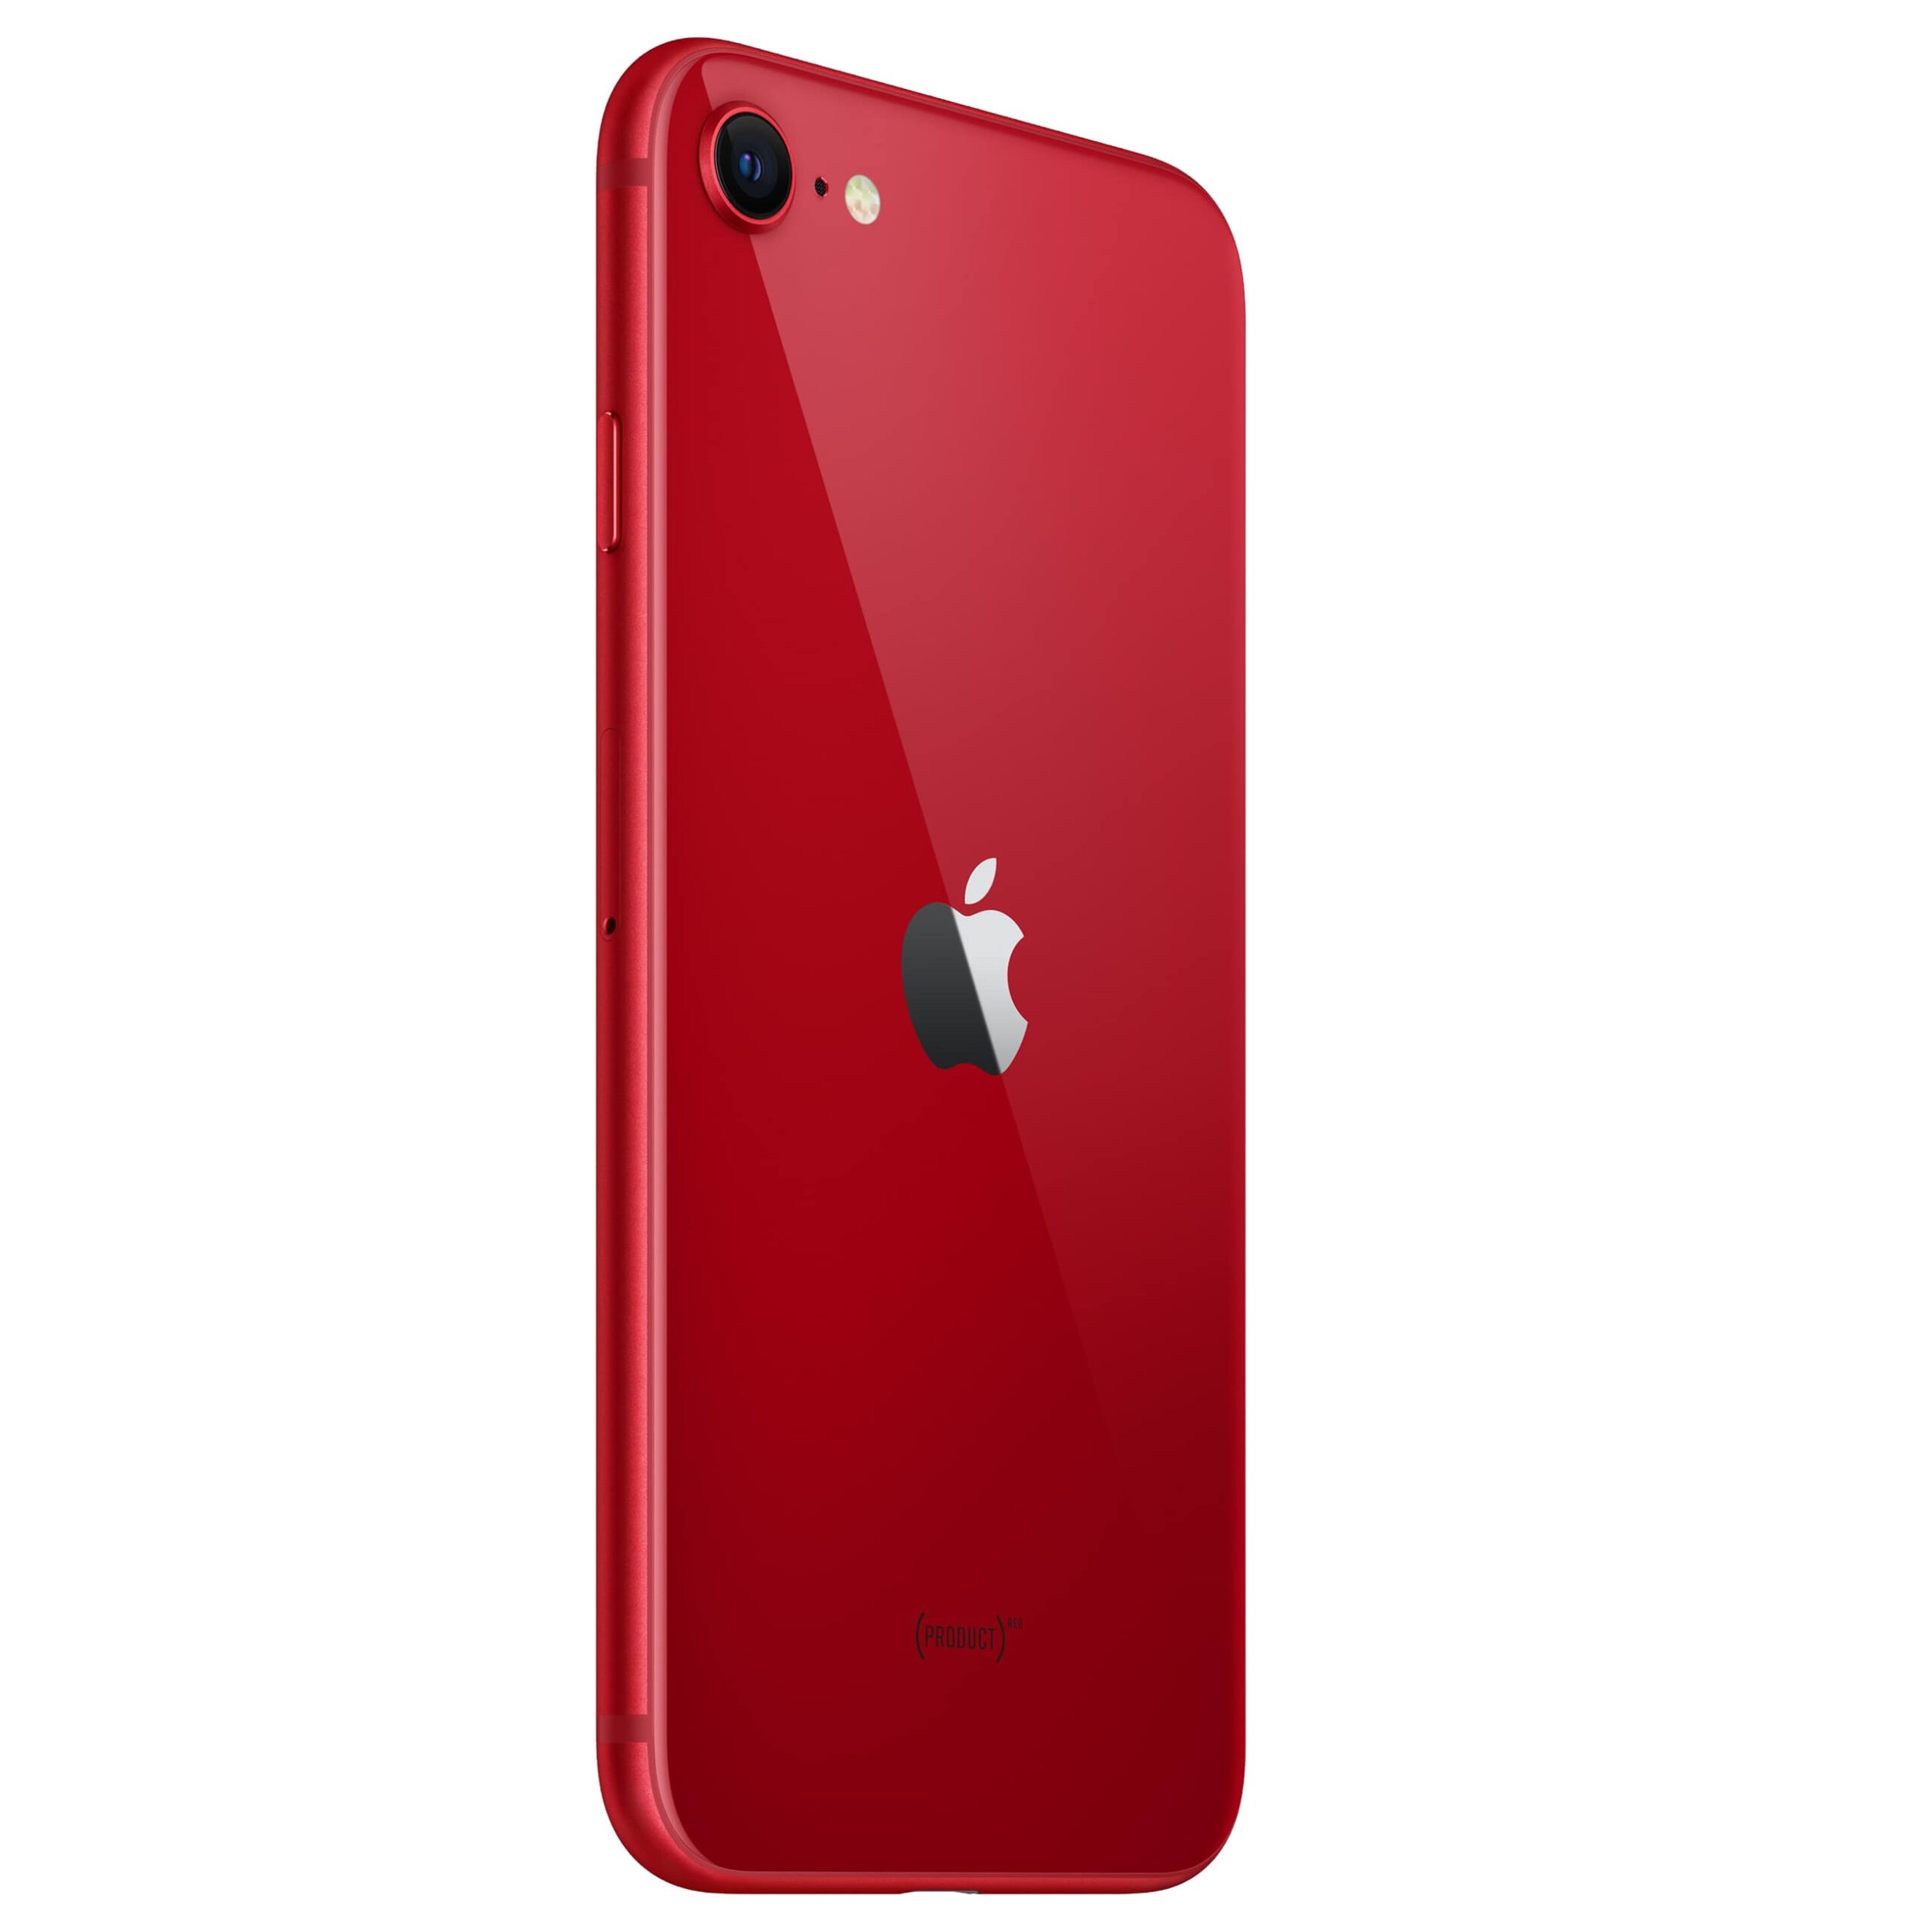 Apple iPhone SE (2022)Wie neu – AfB-refurbished